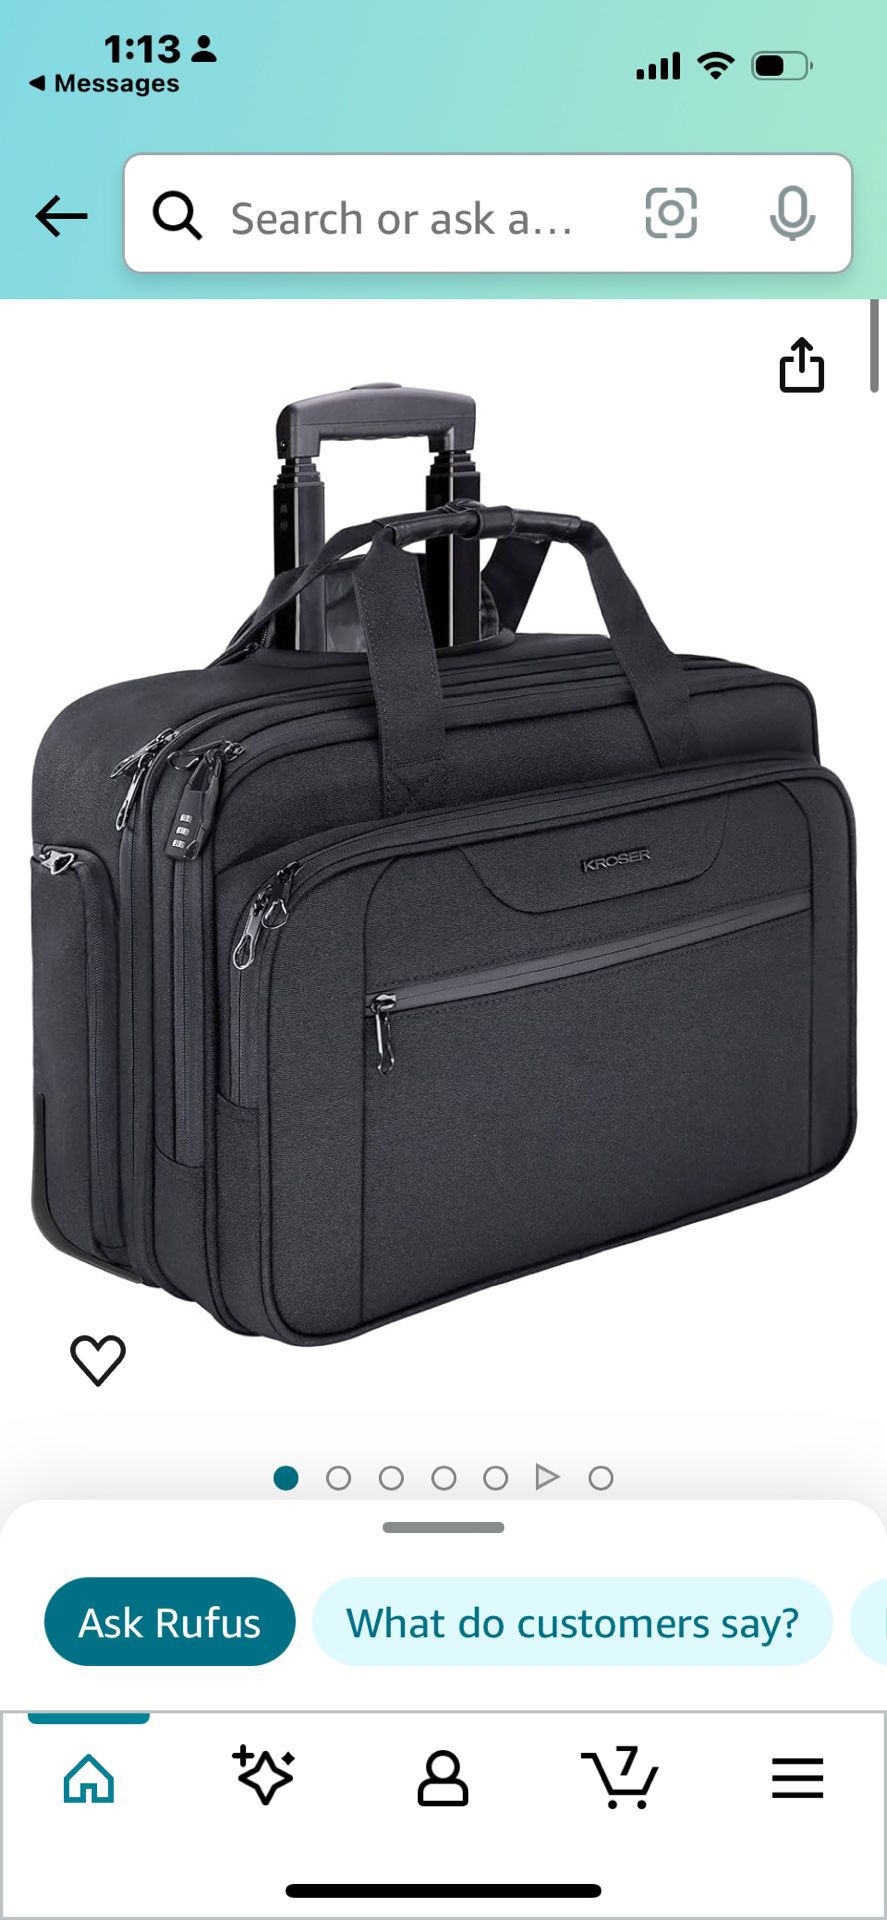 Kroser Laptop Wheeled Bag